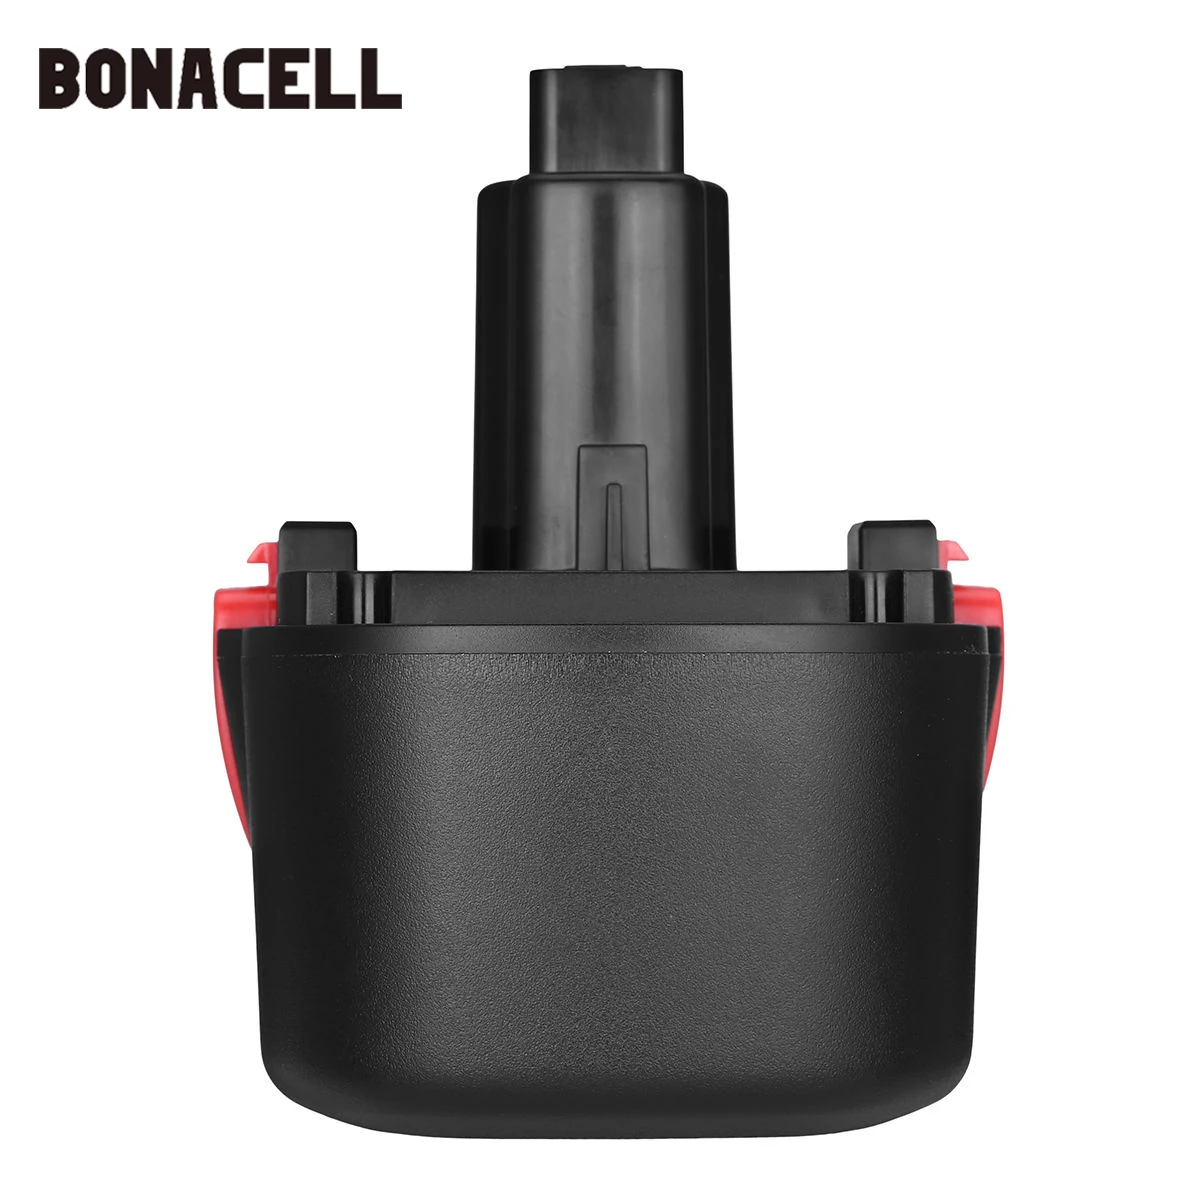 Bonacell 14,4 V 3000 мА/ч, Батарея для Lincoln смазочный шприц 1401 1442 1444 40393 40394 1400 1444E L10